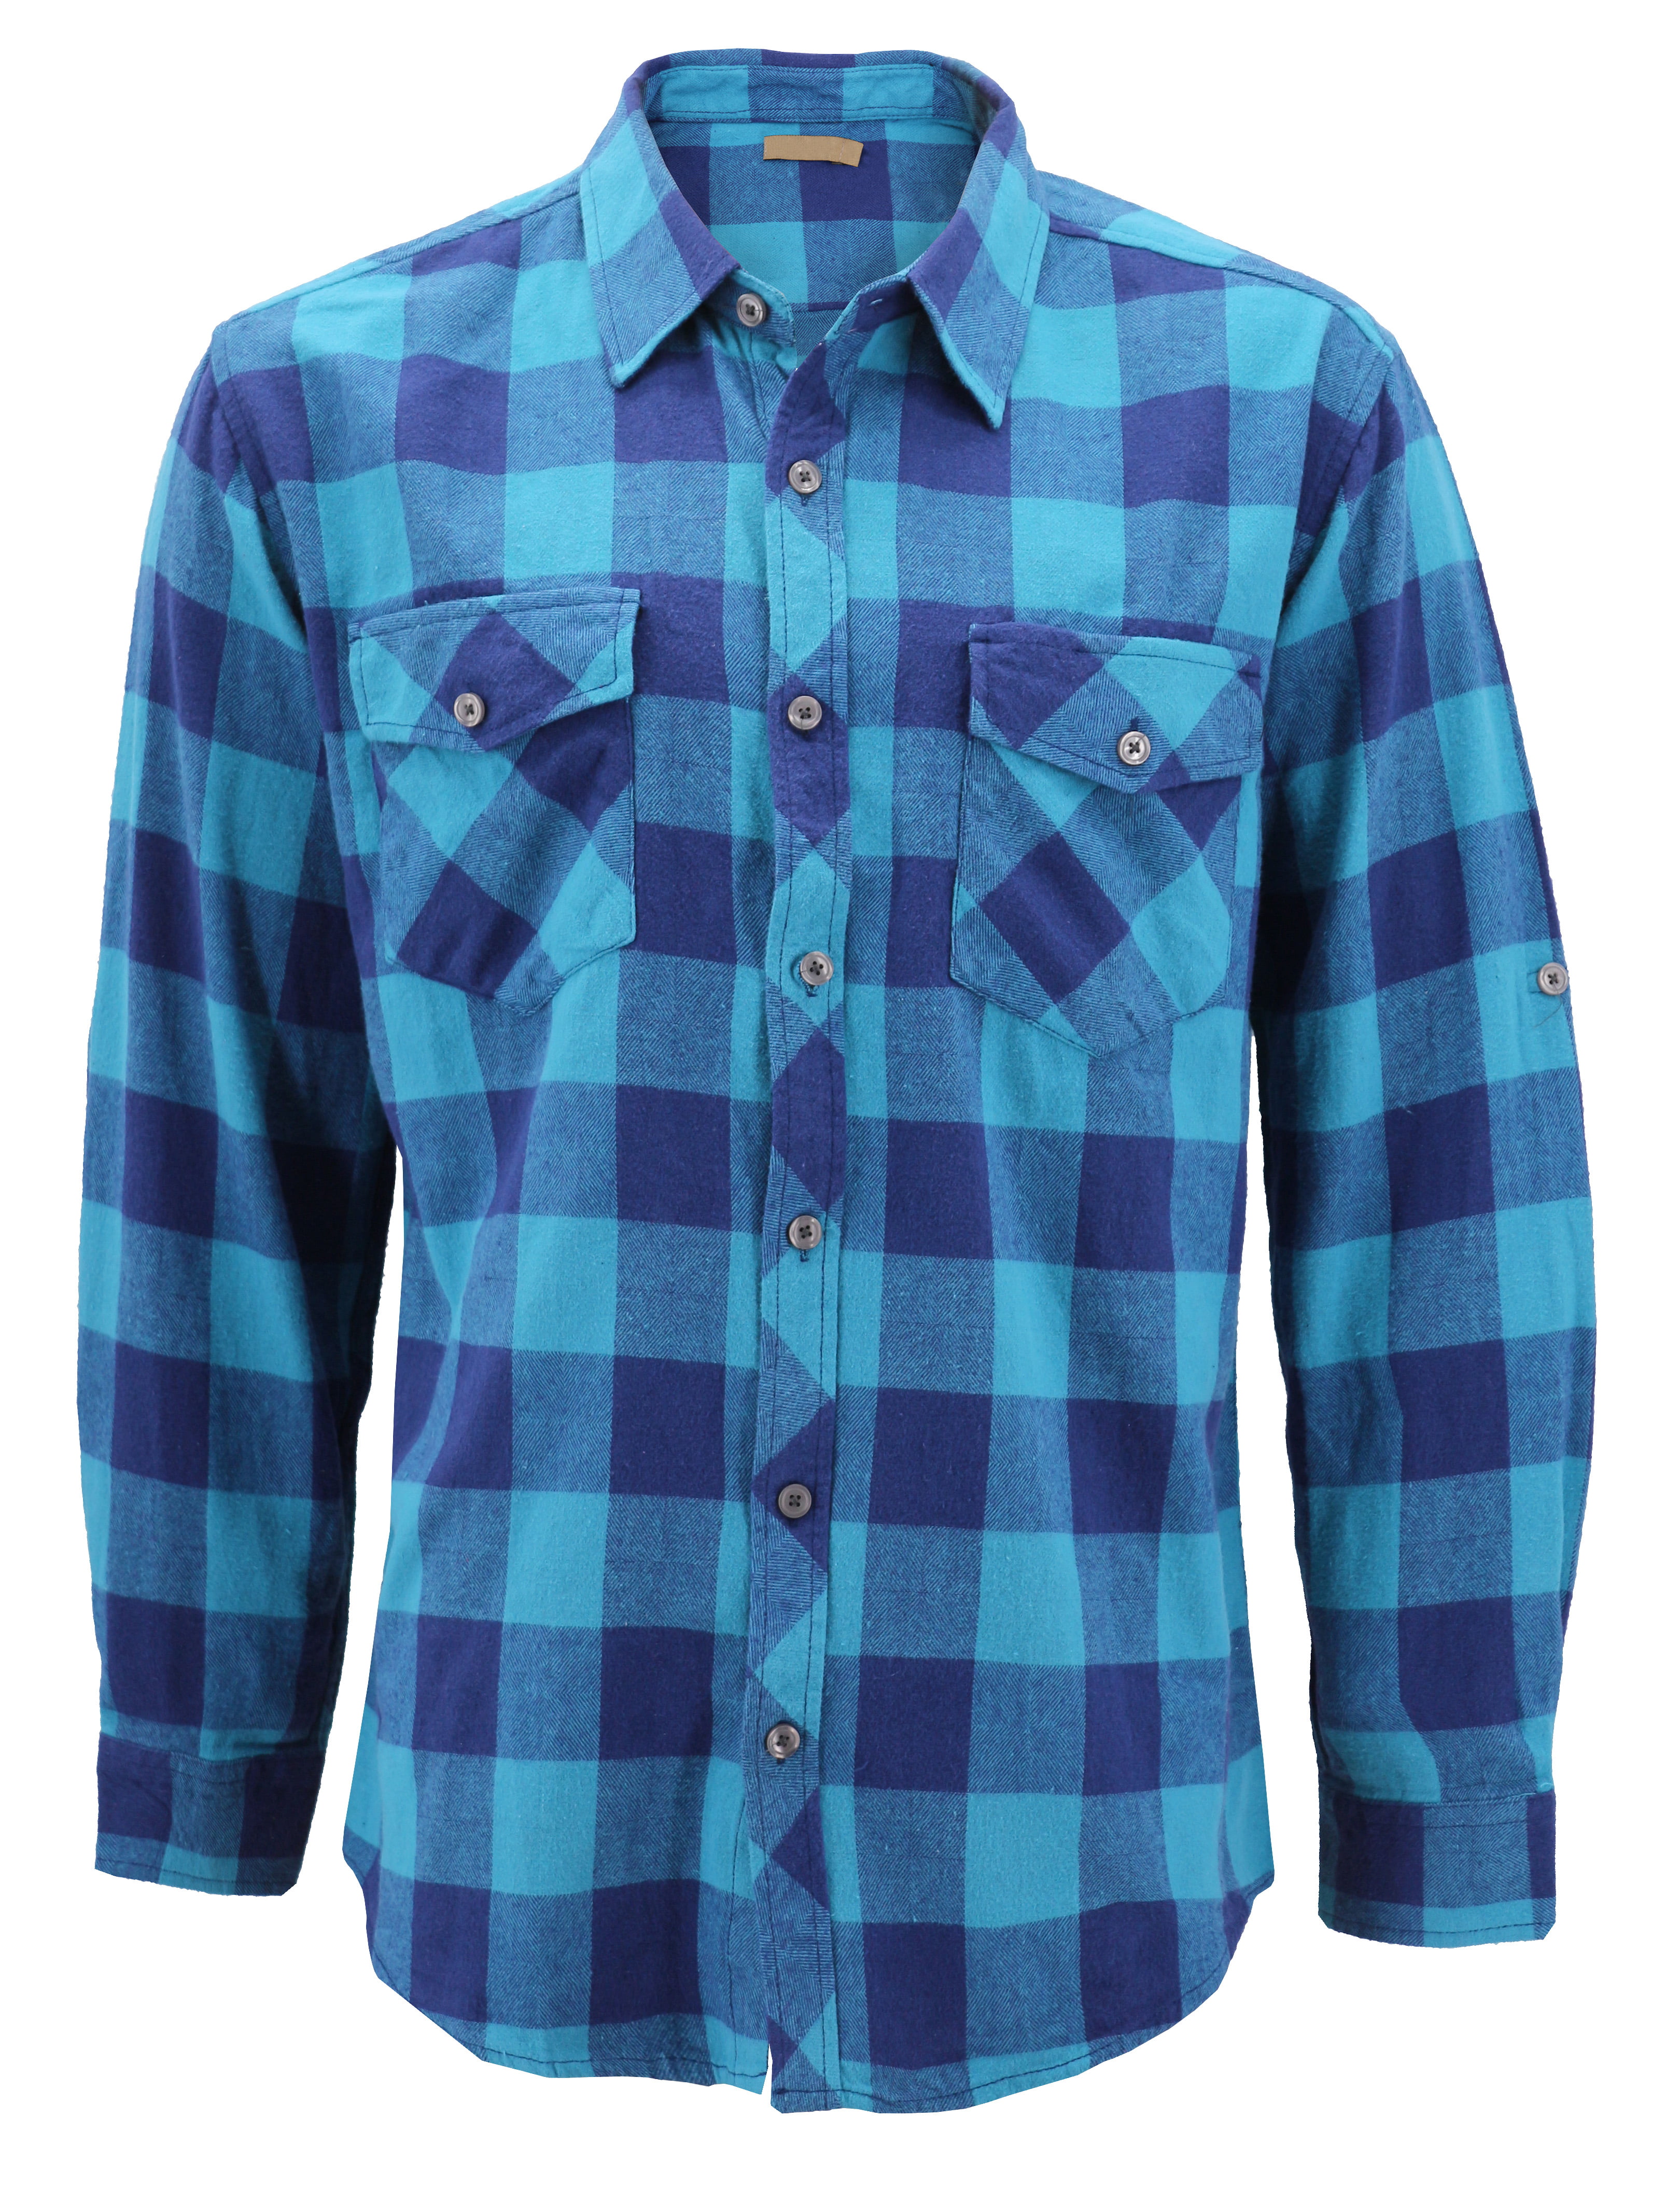 AKARMY Mens Cotton Plaid Flannel Long Sleeve Button Up Fleece Shirt